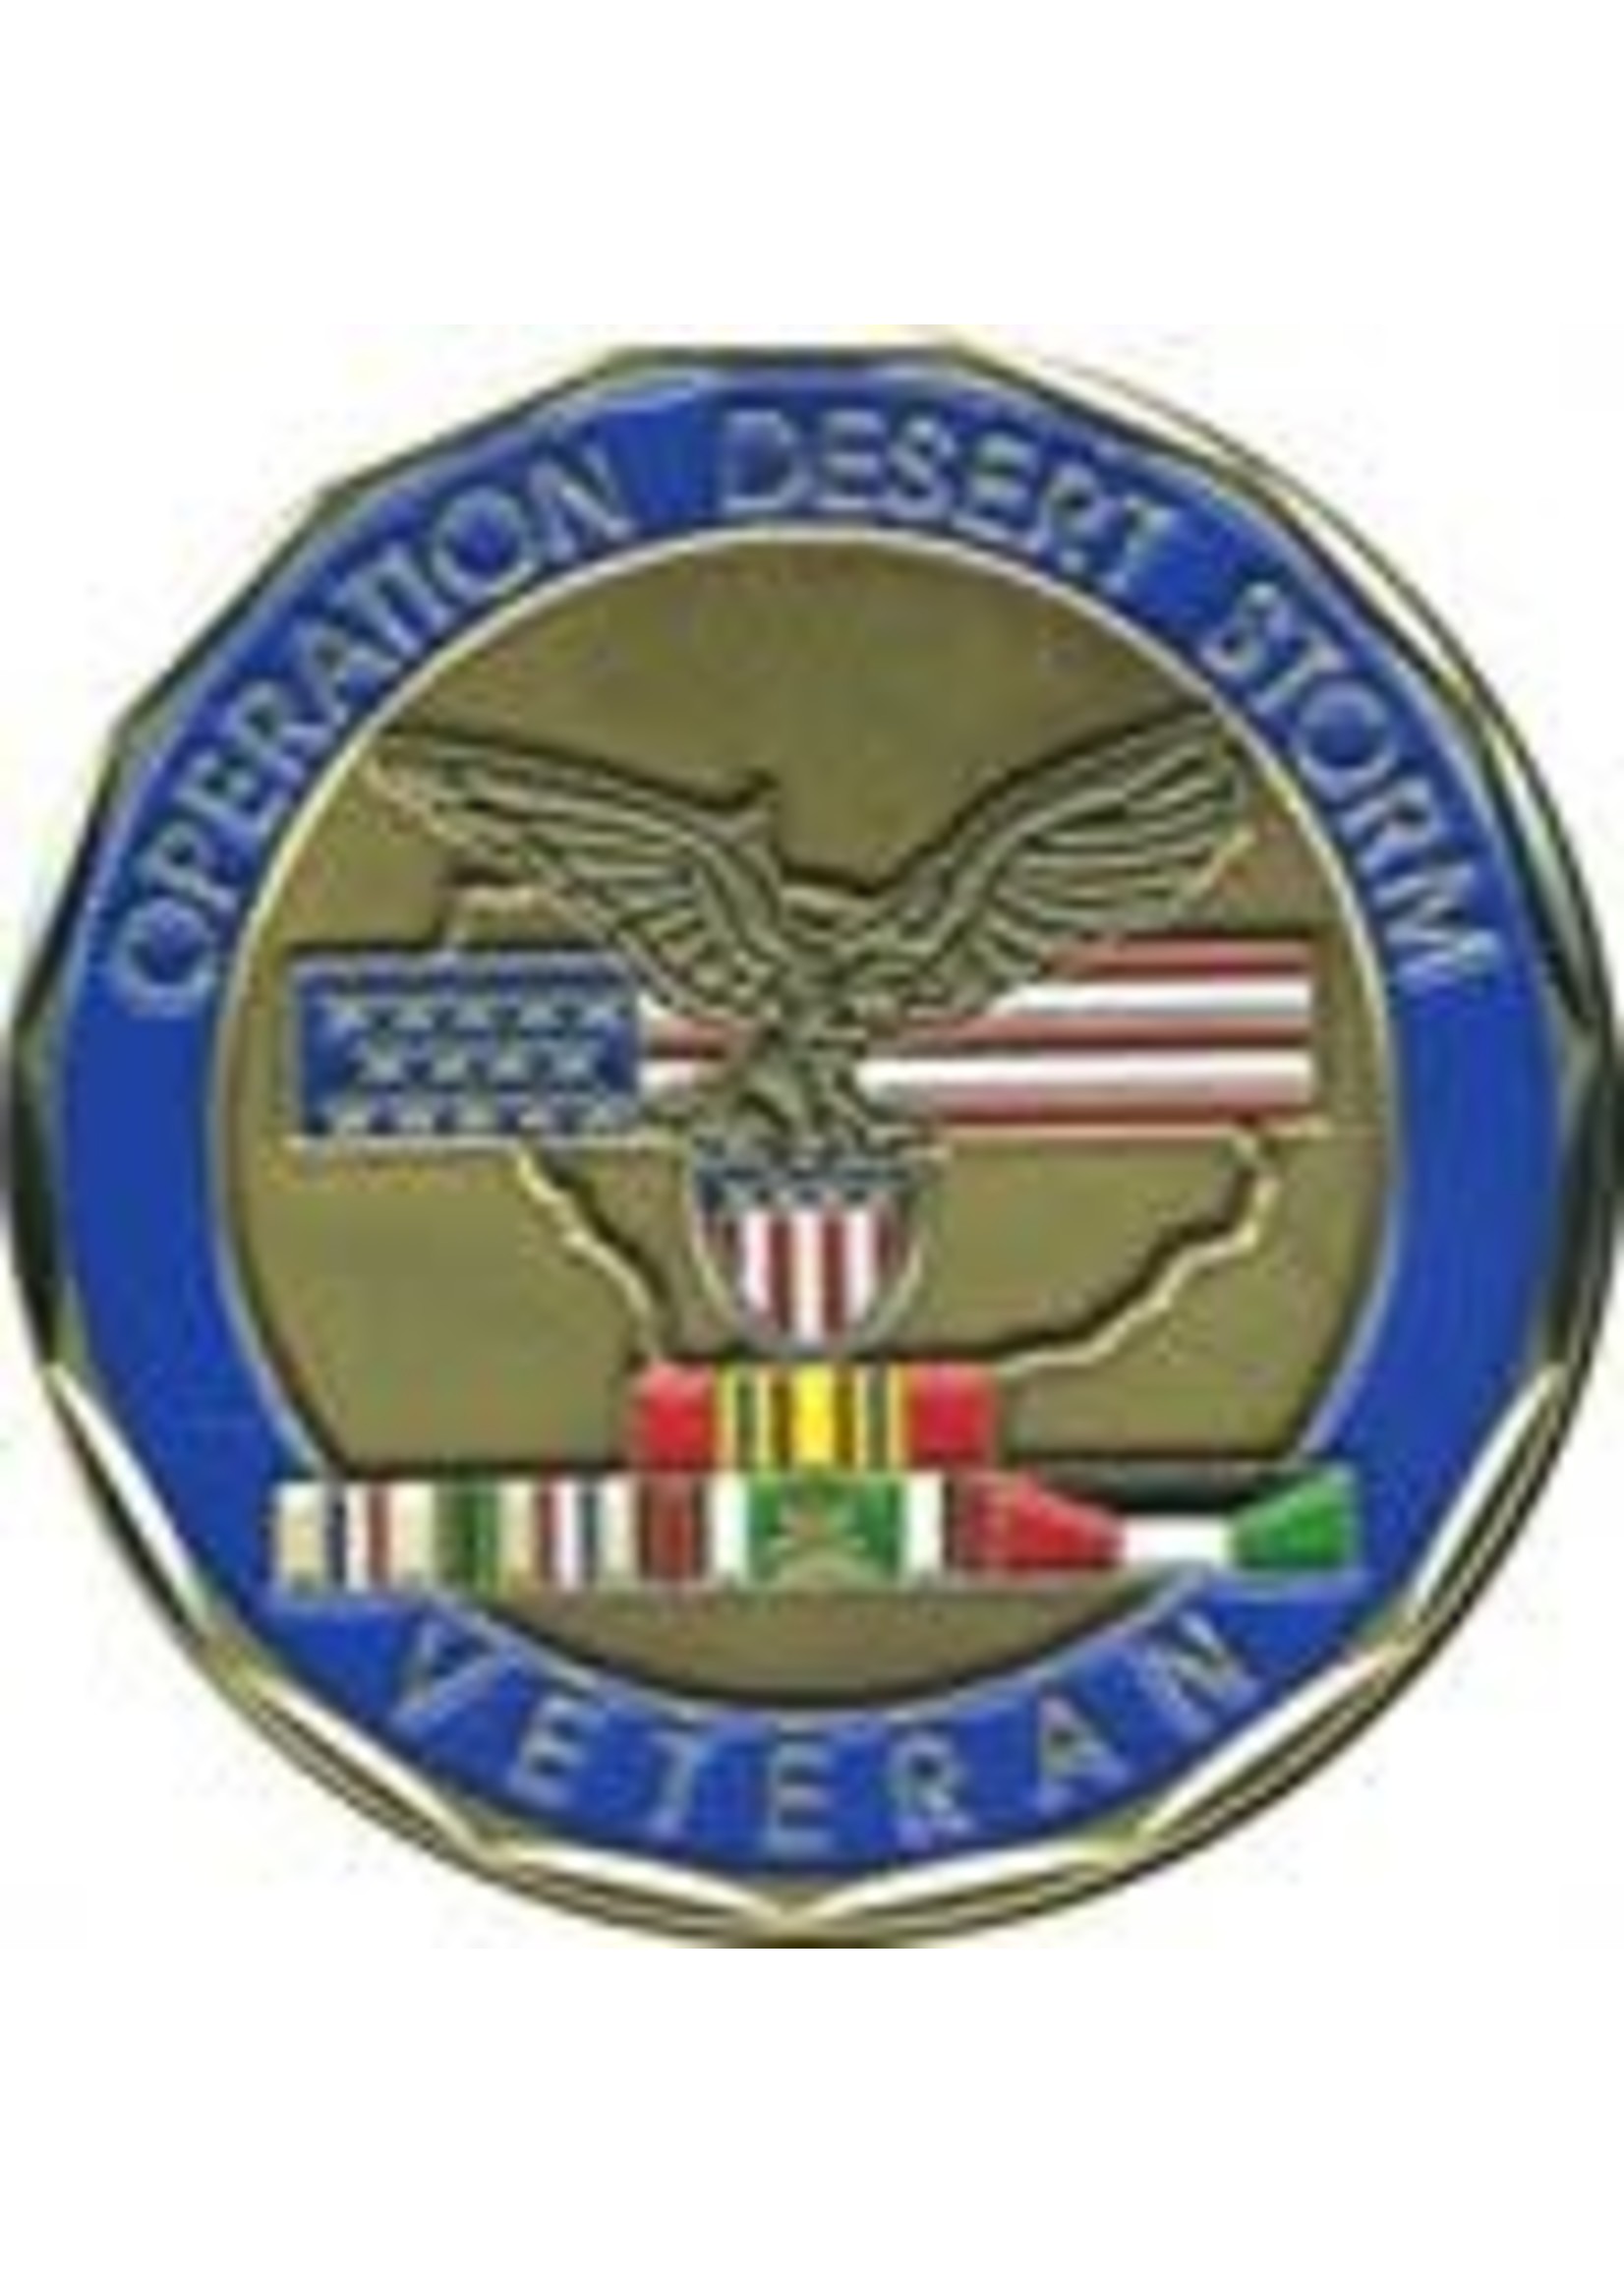 Eagle Crest Challenge Coin - Operation Desert Storm